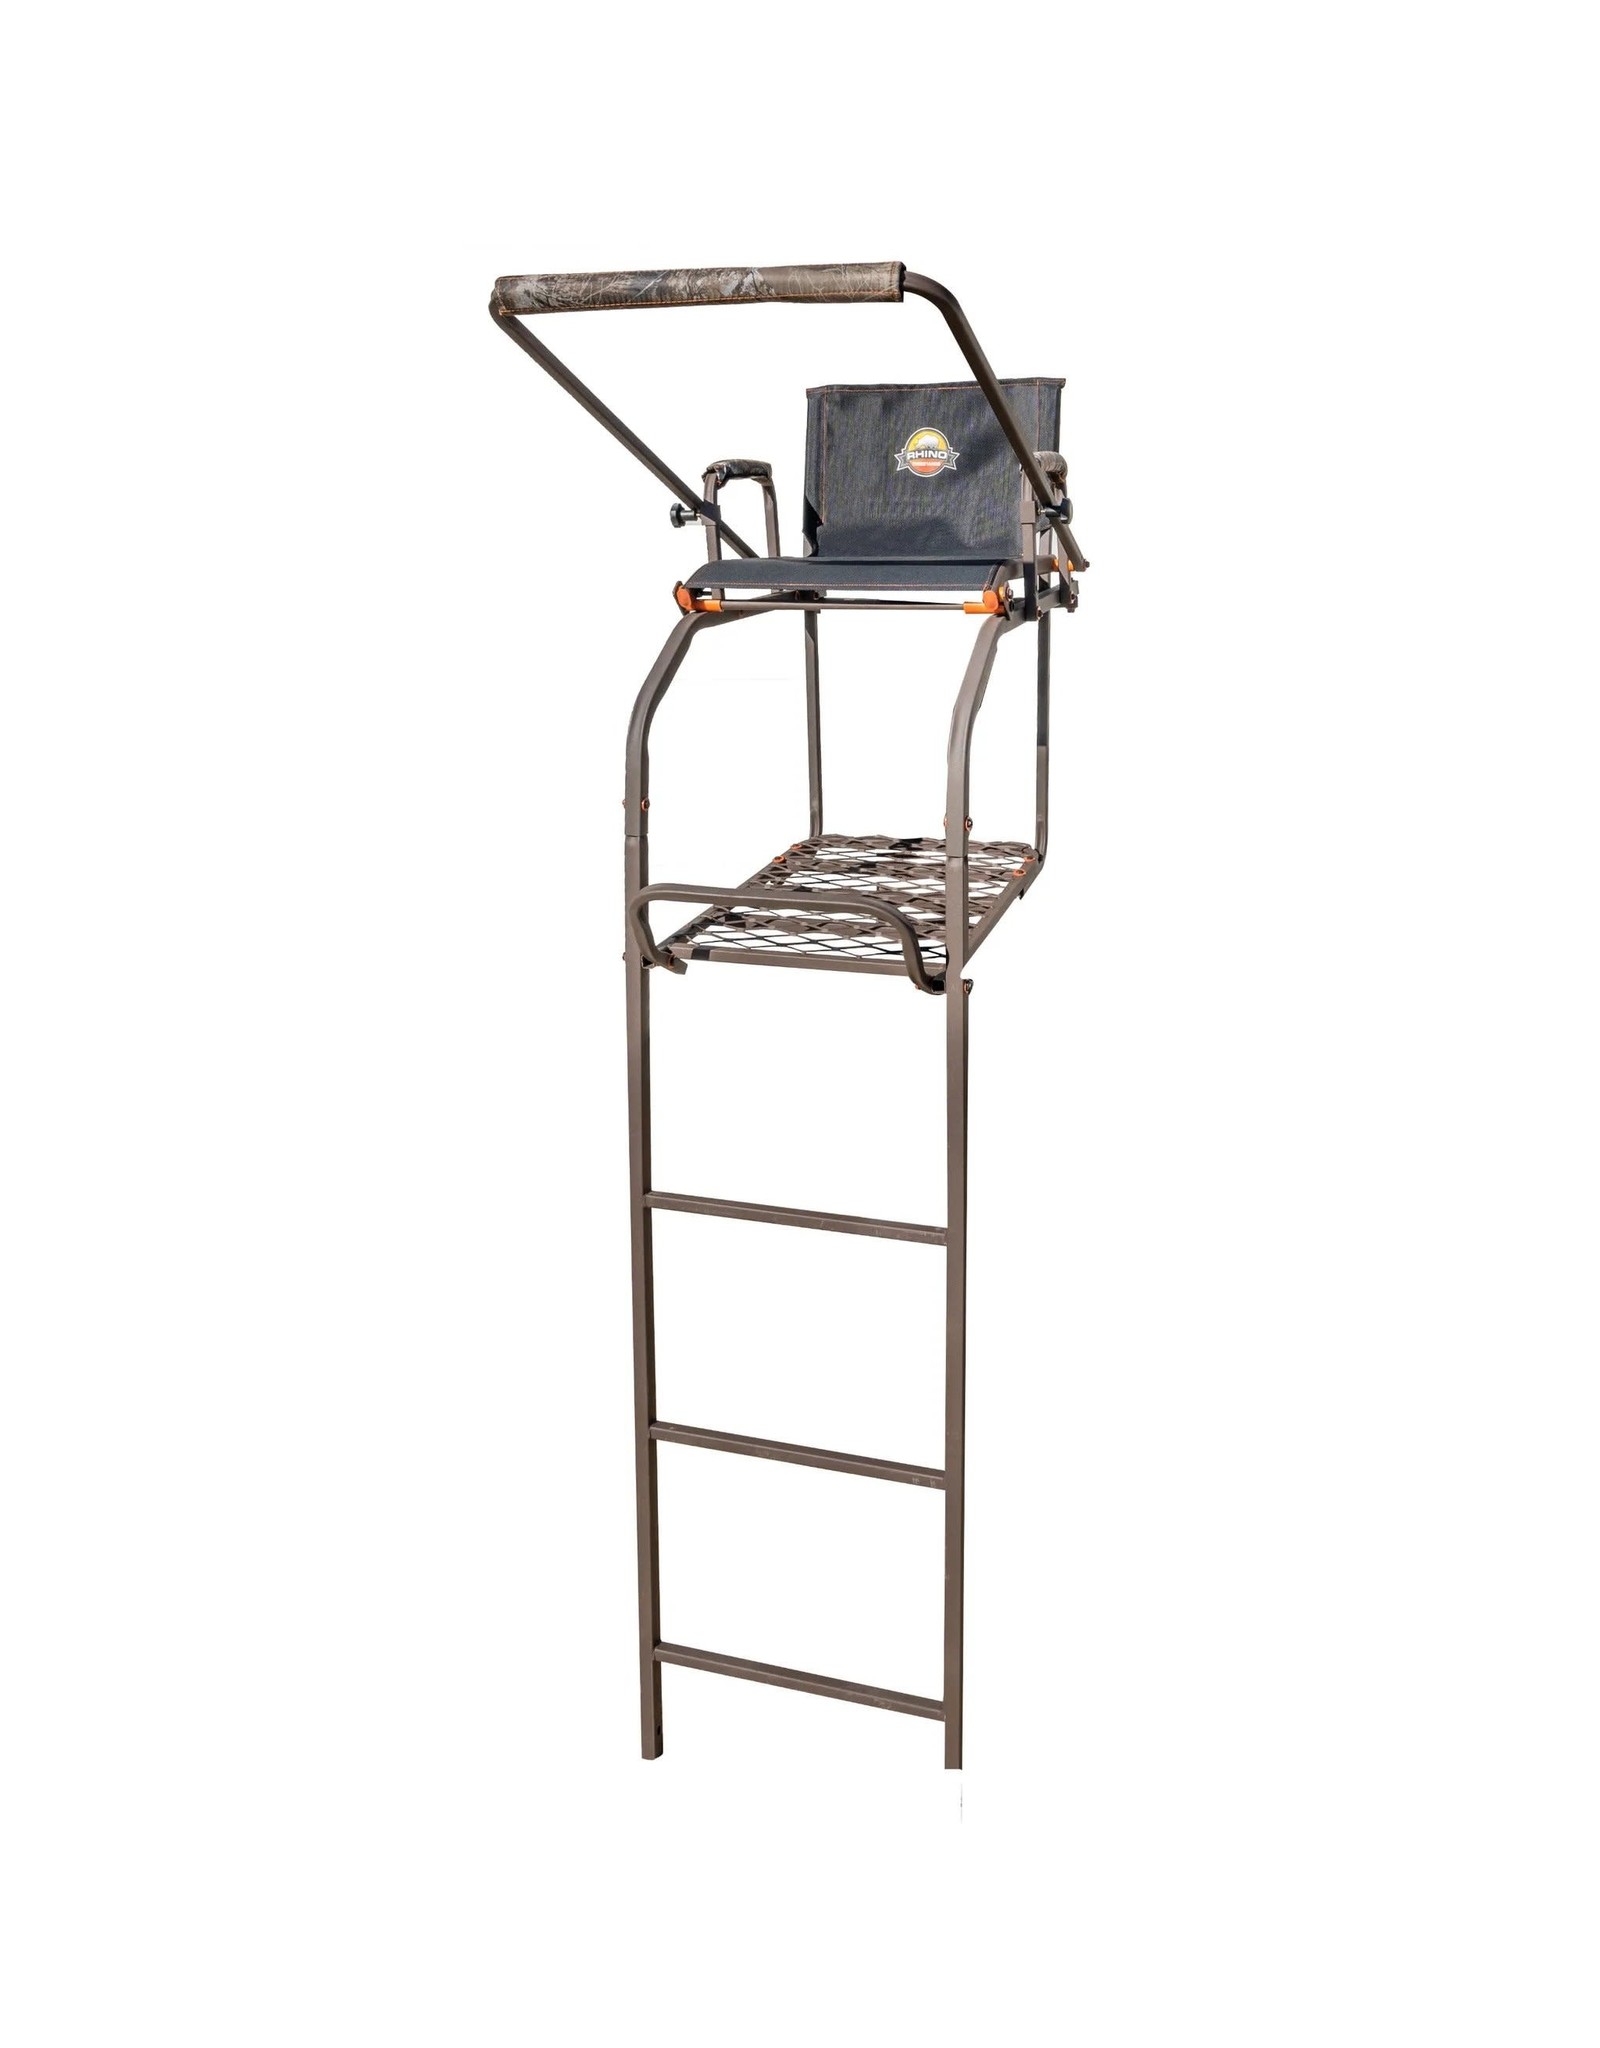 Rhino RTL-200 (16ft Single Ladder Stand)